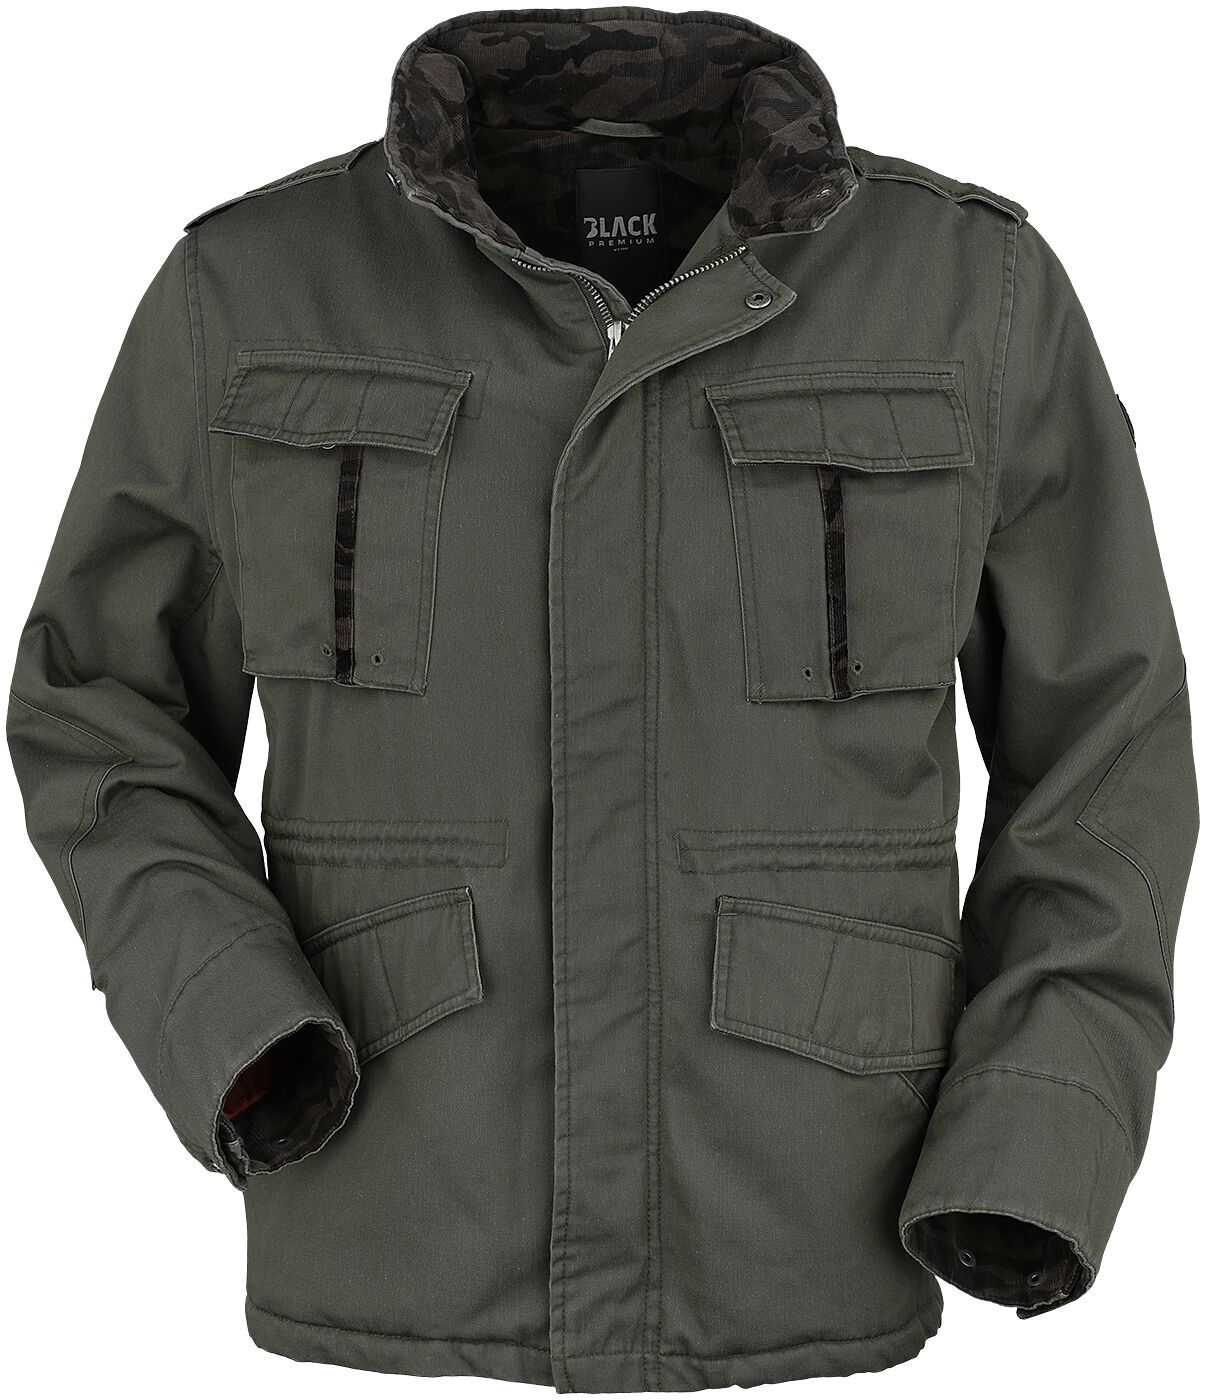 Black Premium by EMP Jacket with hidden hood Winterjacke oliv olivcamo in M